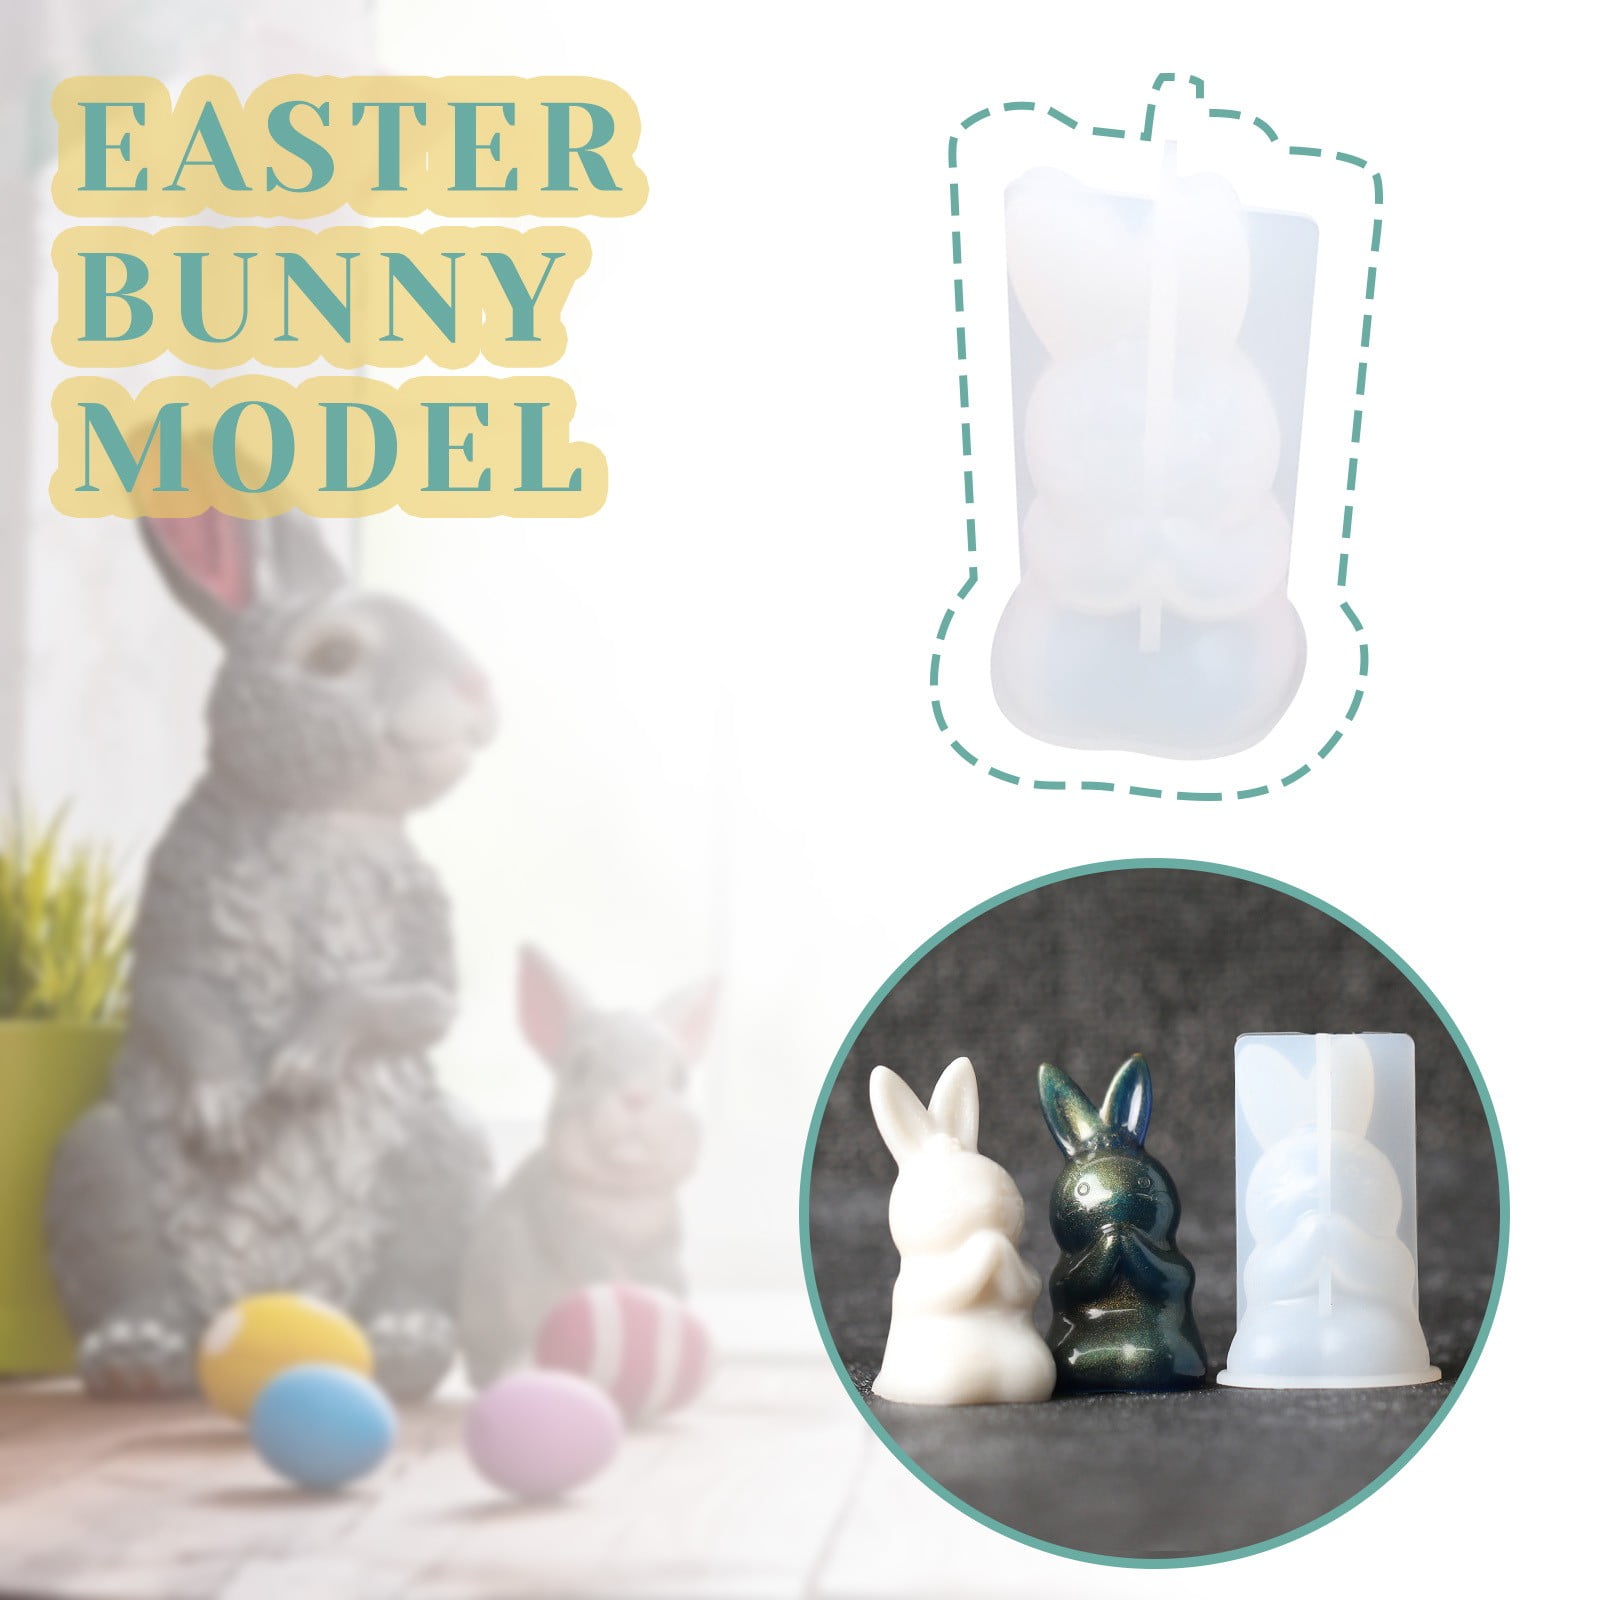 Handmade floral bunny model